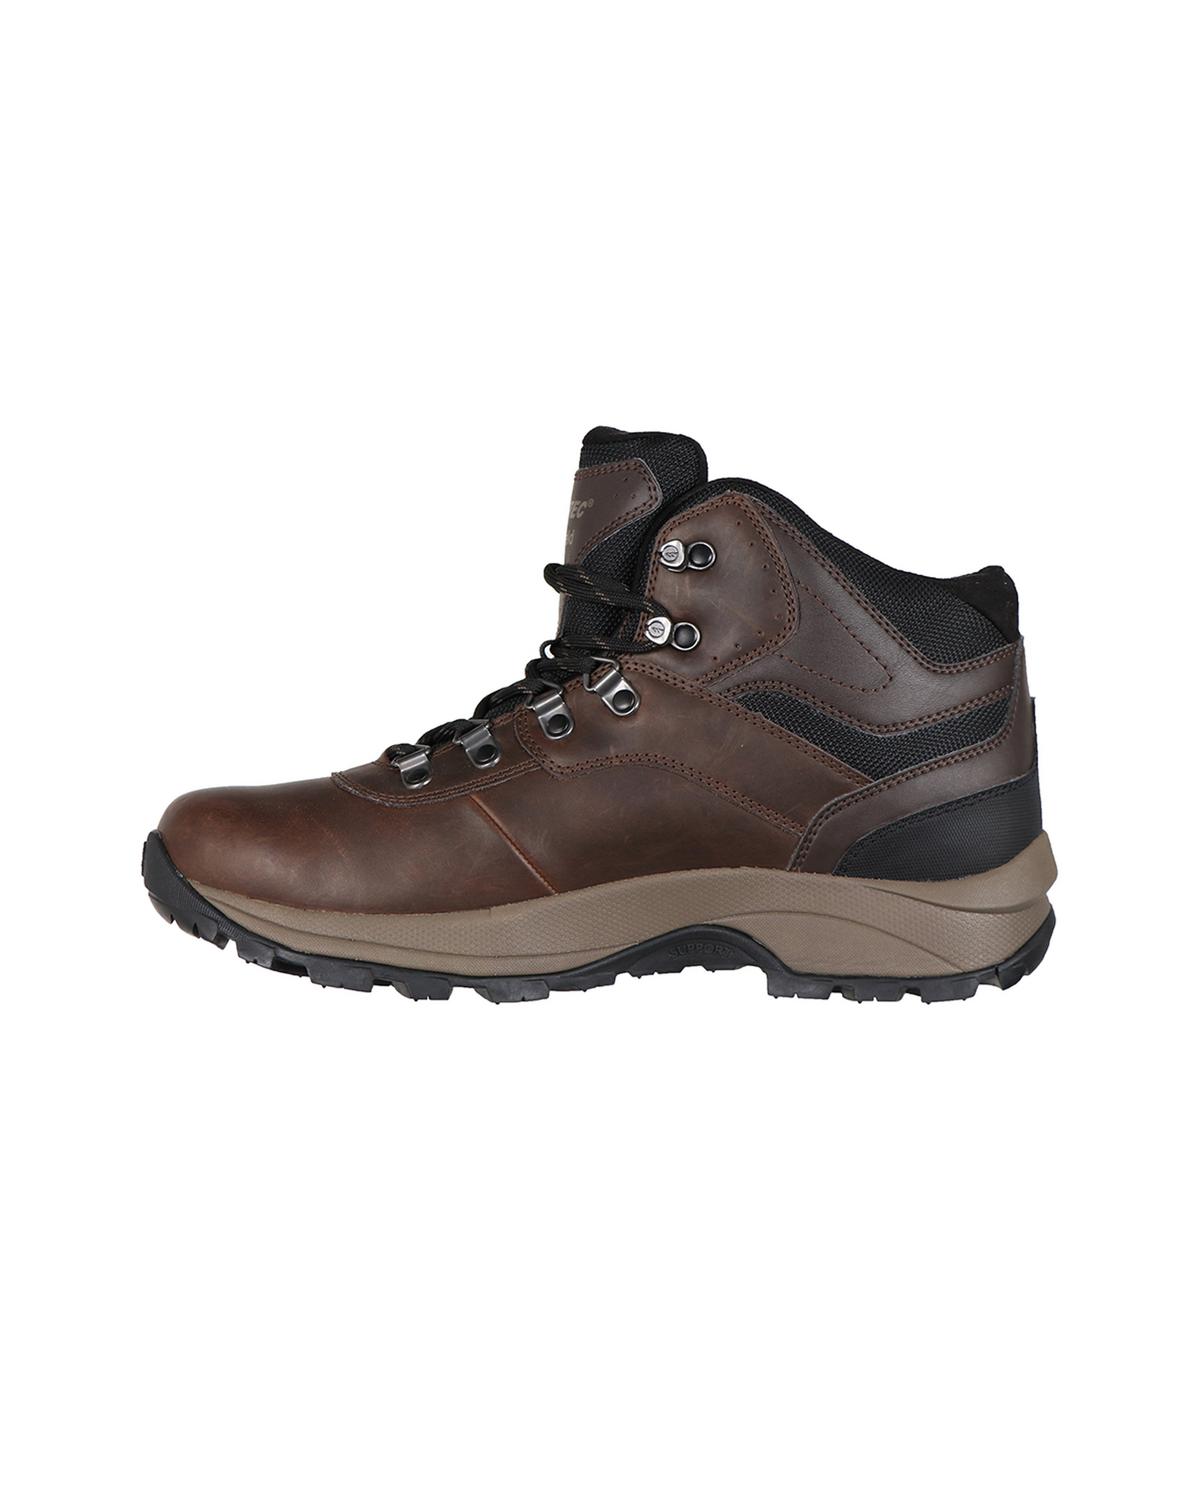 Hi-Tec Women's Altitude 6 Mid Hiking Boots -  Chocolate/Chocolate